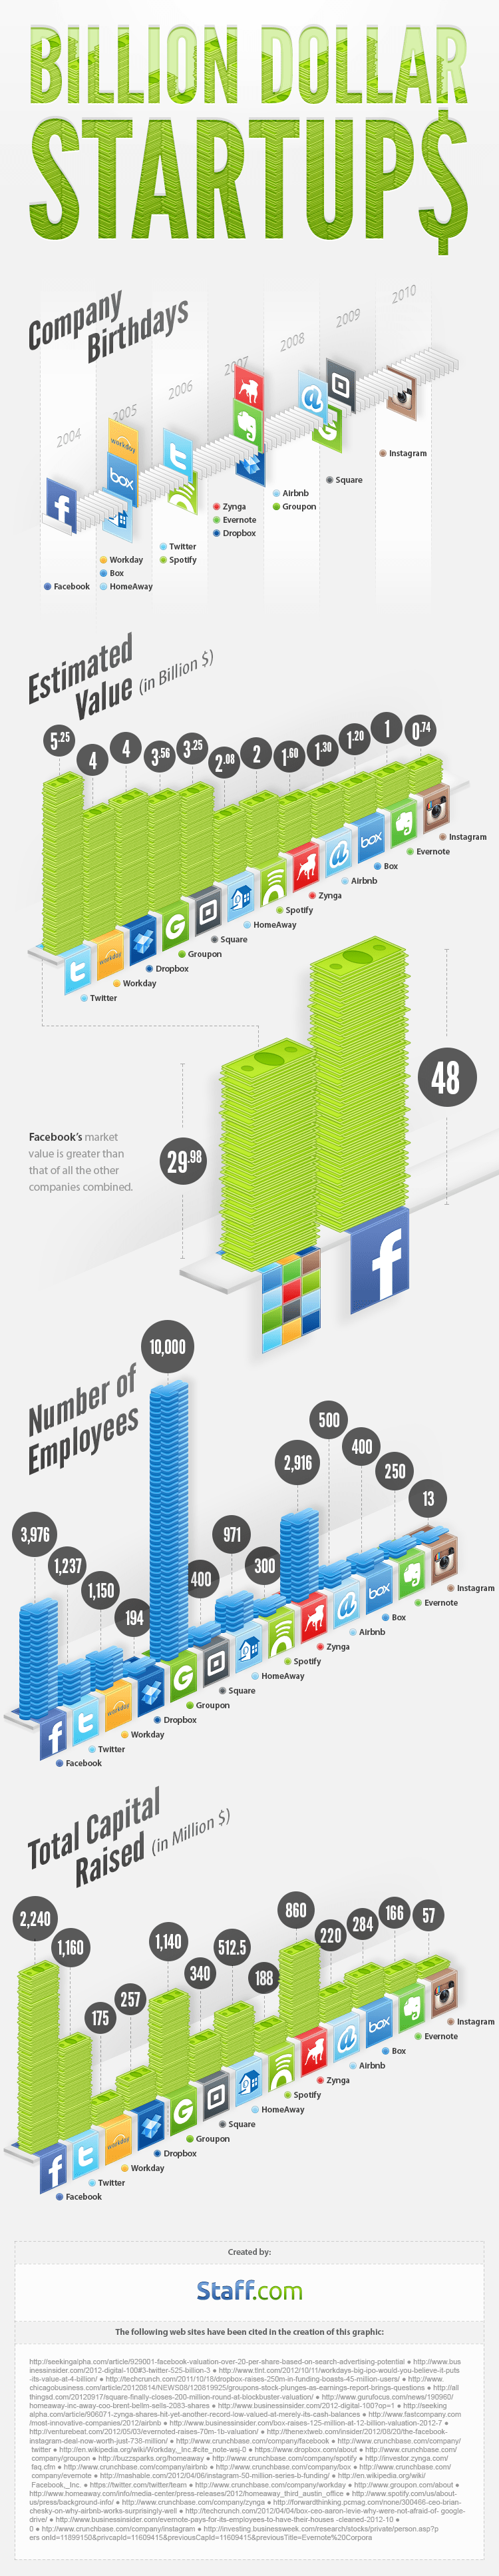 billion dollar startups infographic